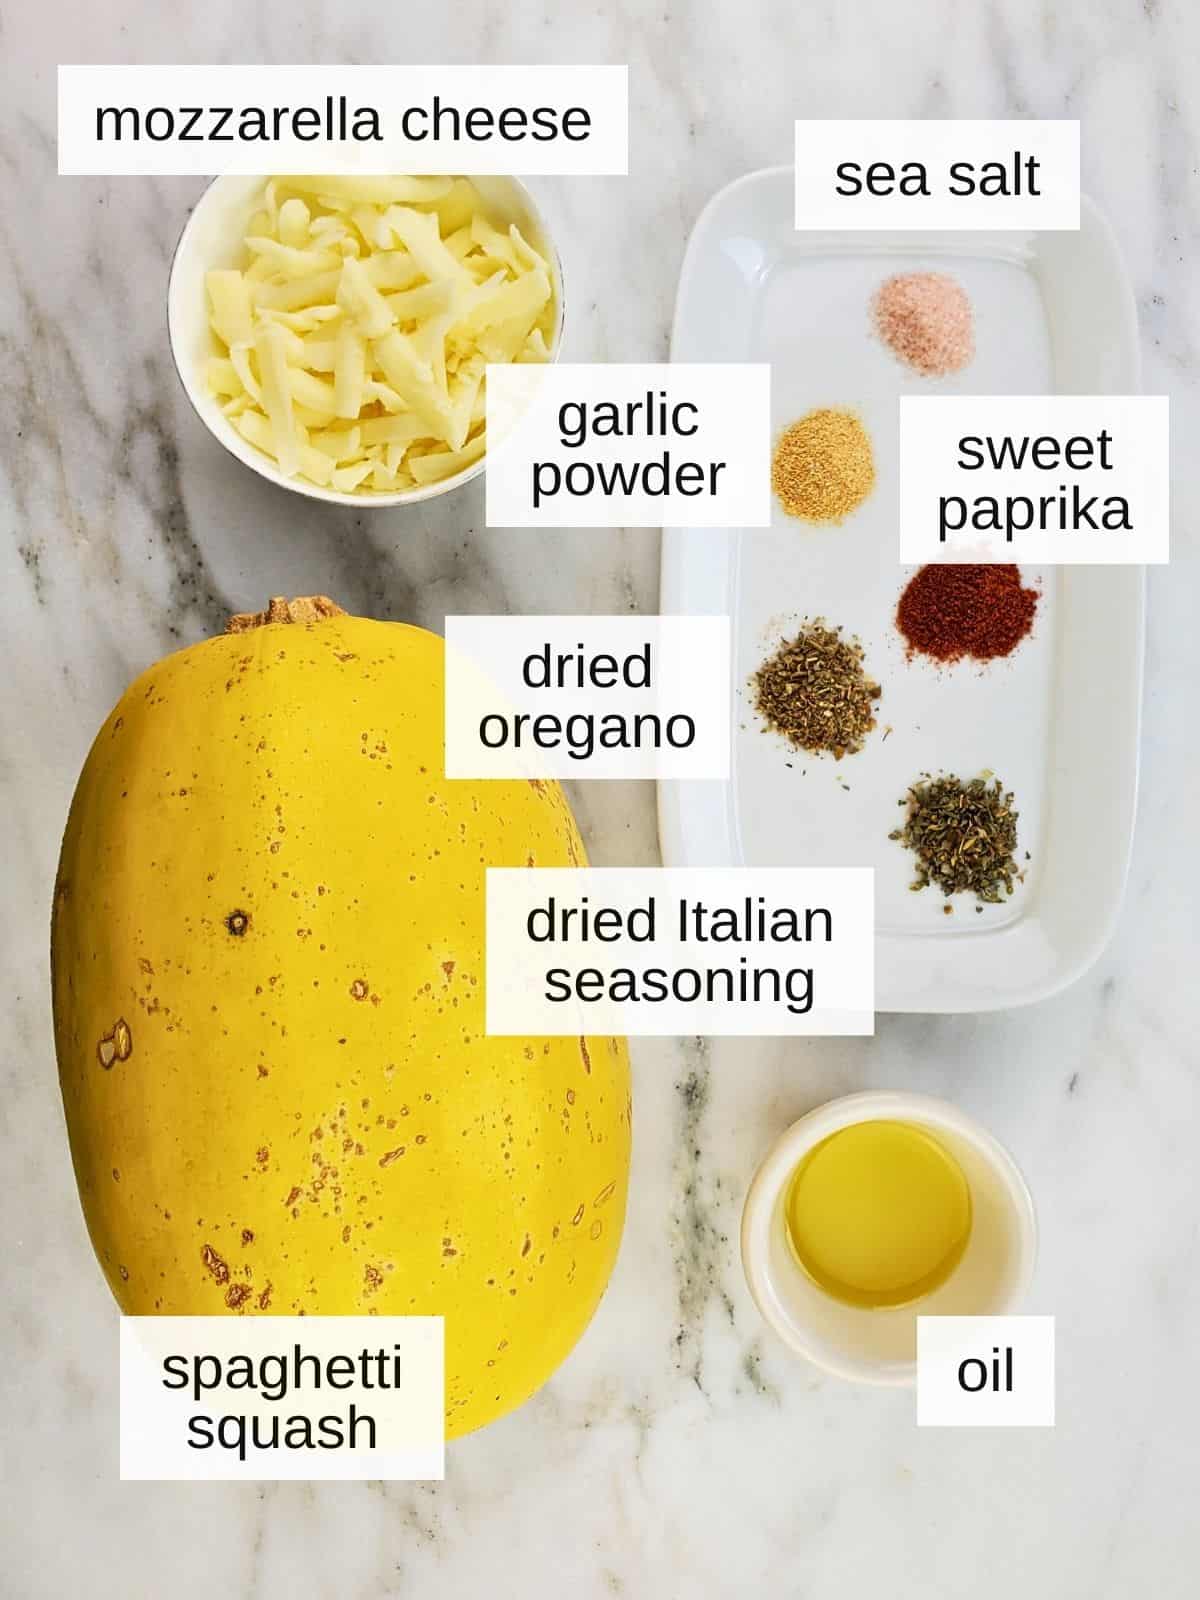 ingredients for roast spaghetti squash, including mozzarella cheese, sea salt, garlic powder, sweet paprika, dried oregano, dried Italian seasoning, oil, and spaghetti squash.